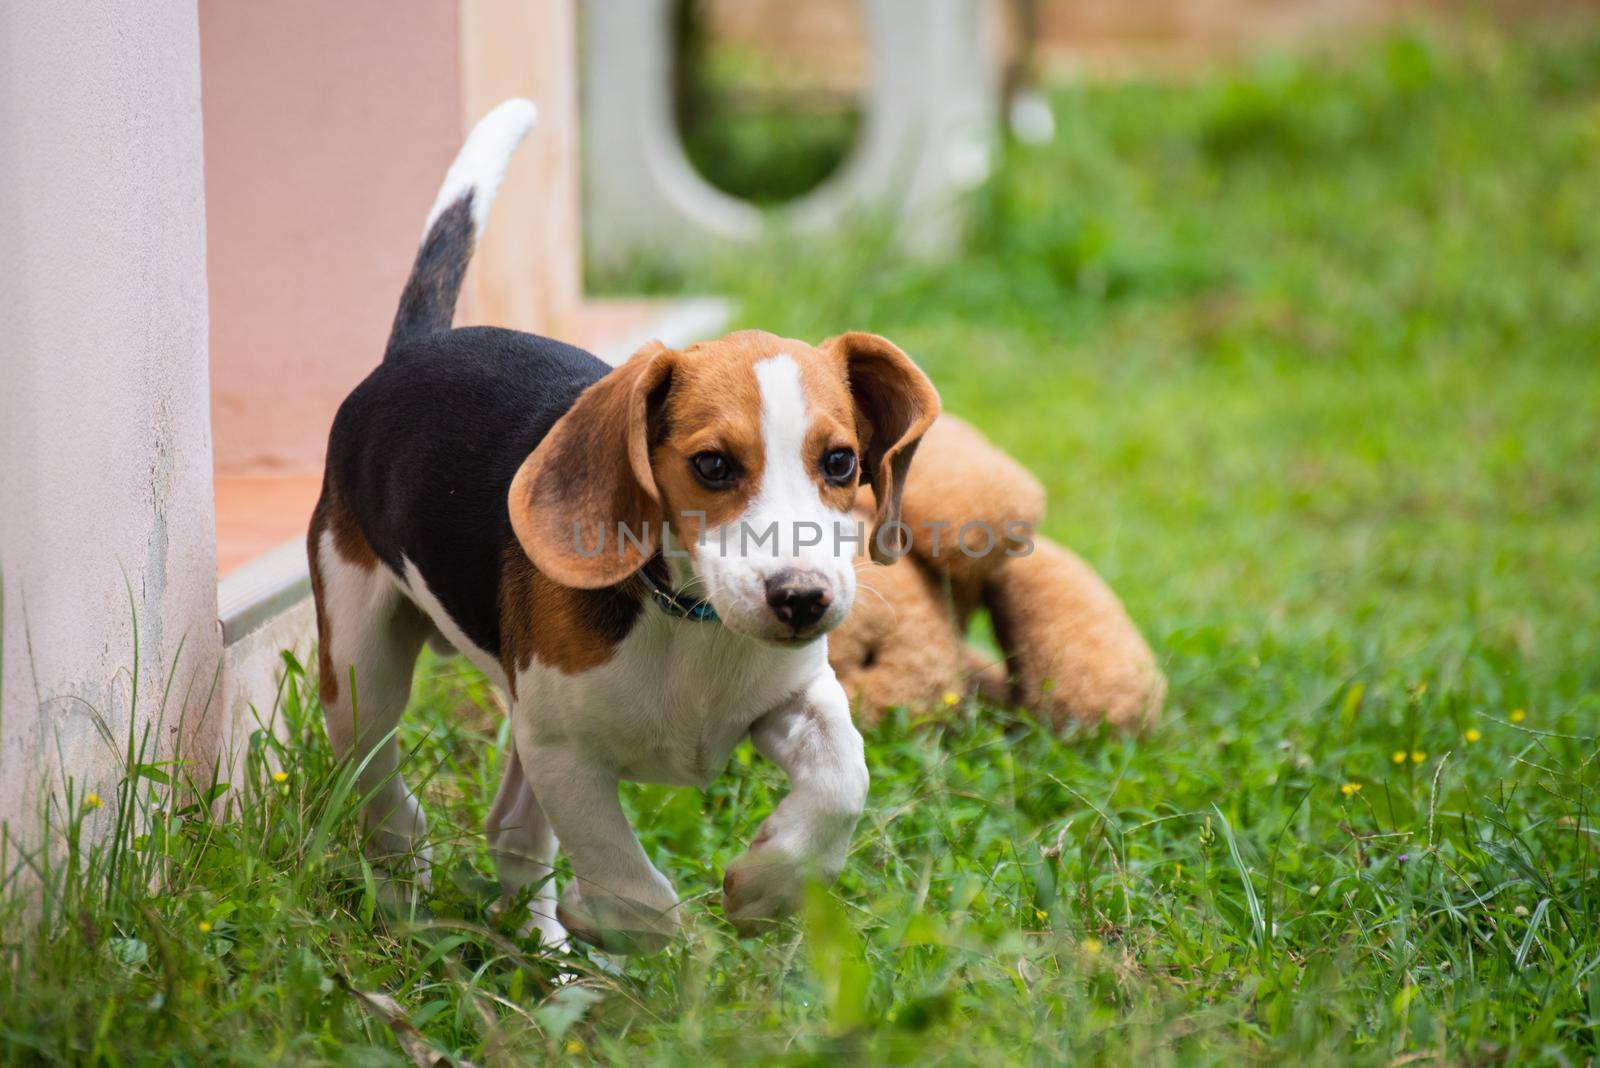 Close up of puppy beagle running, animal pet concept by Wmpix